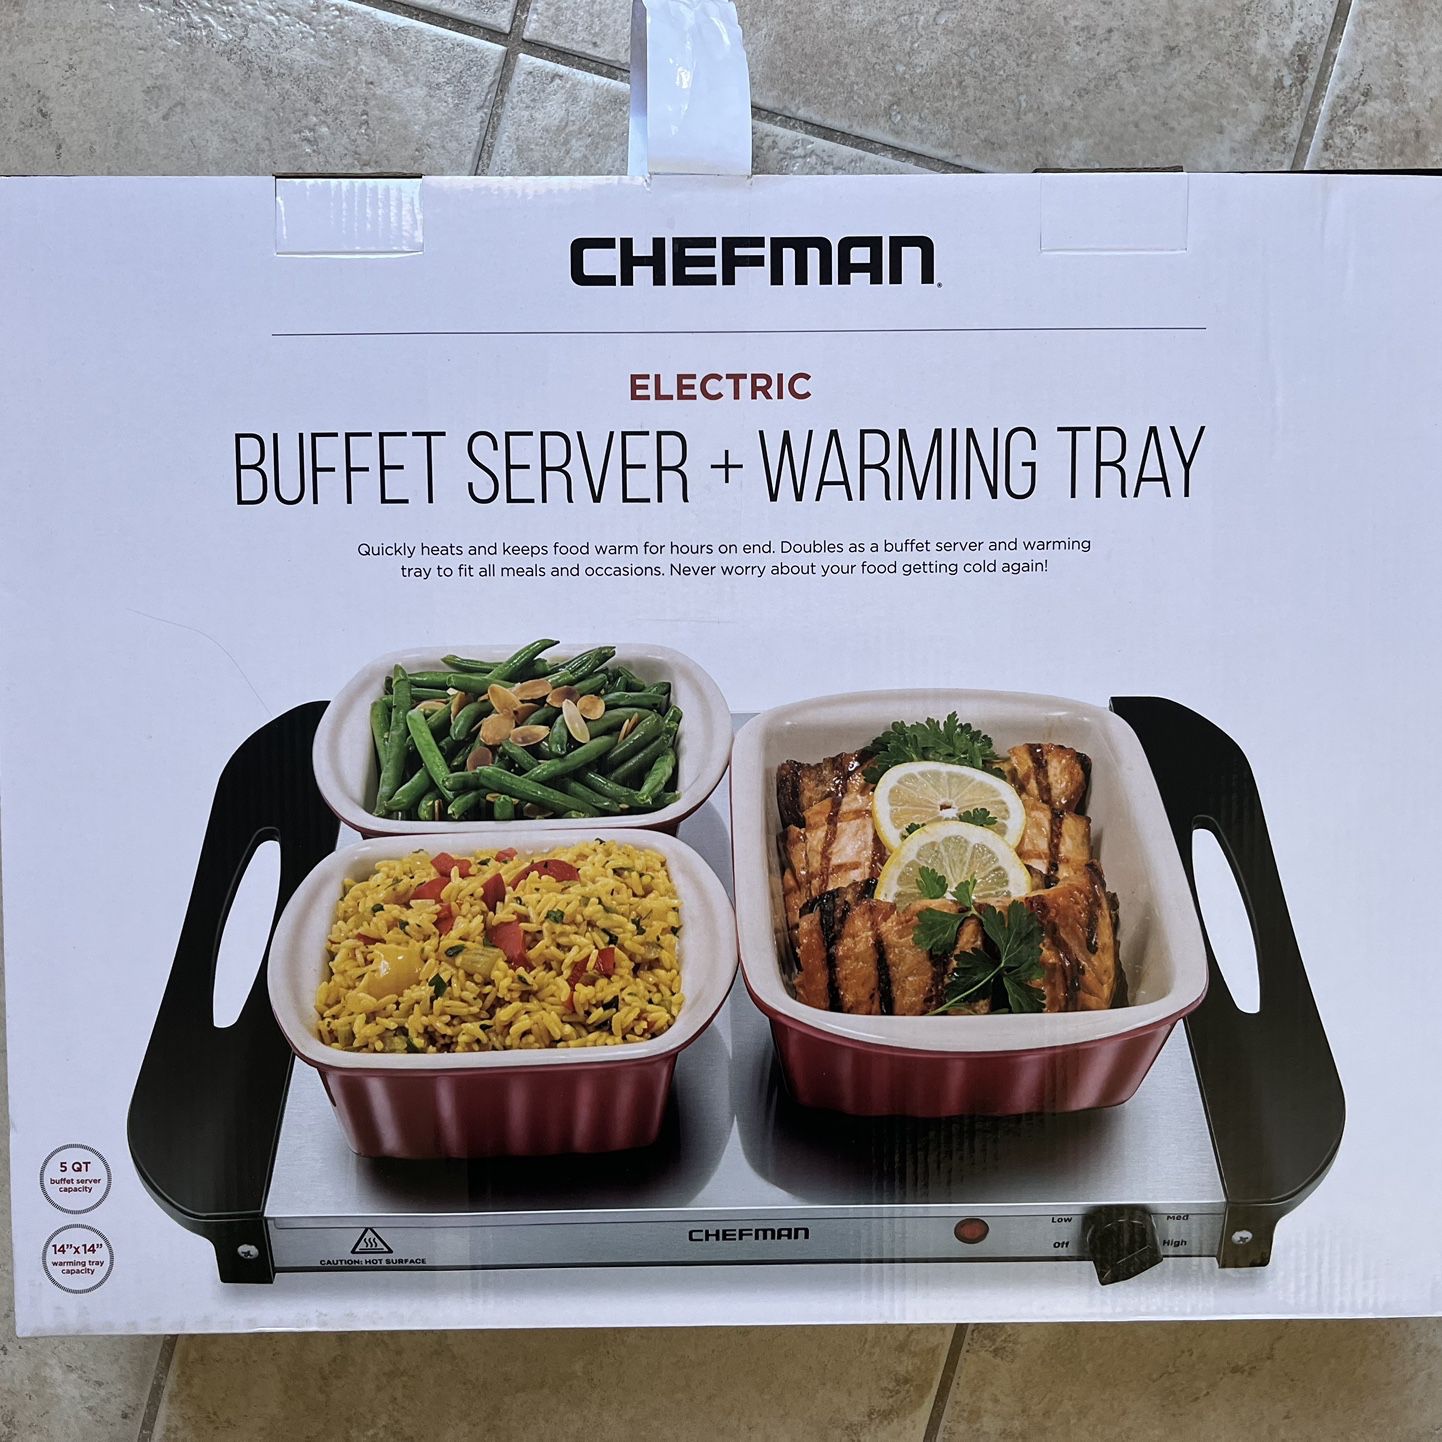 Buffet Servers & Warming Trays at